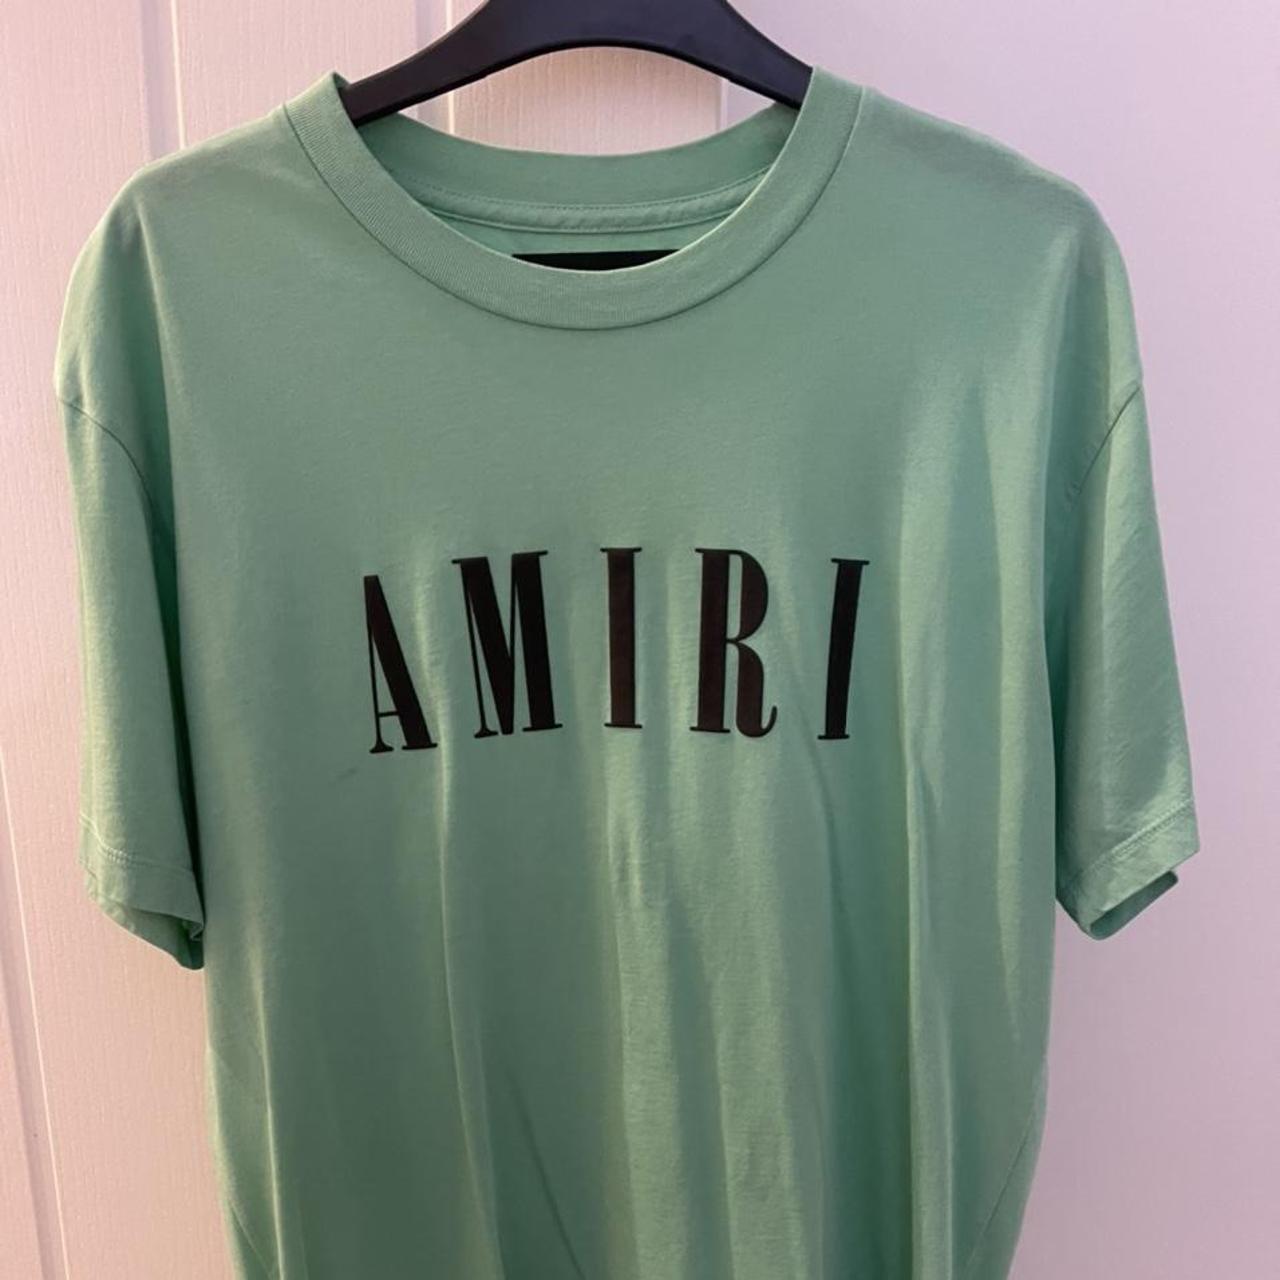 AMIRI, Shirts